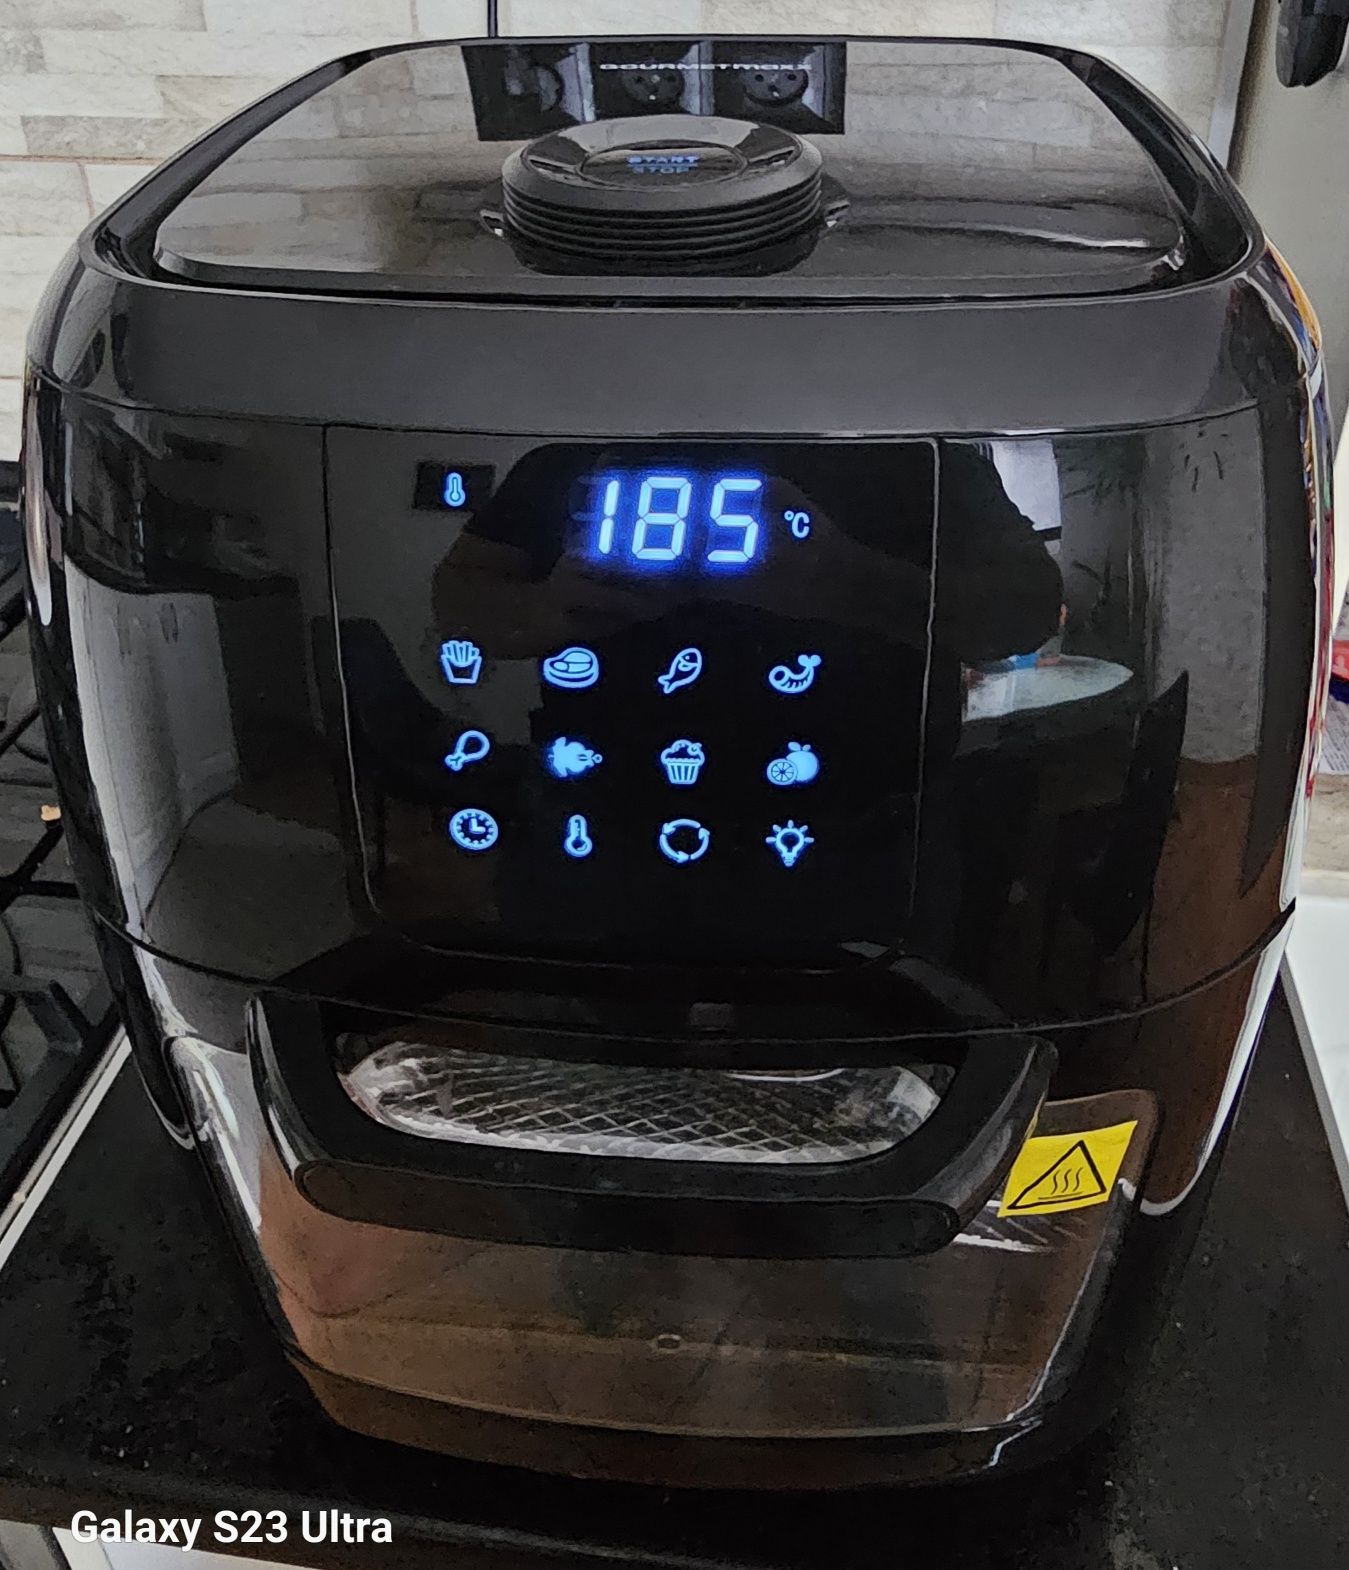 Frytkownica air fryer Gourmetmaxx RA-001 moc 1800 W